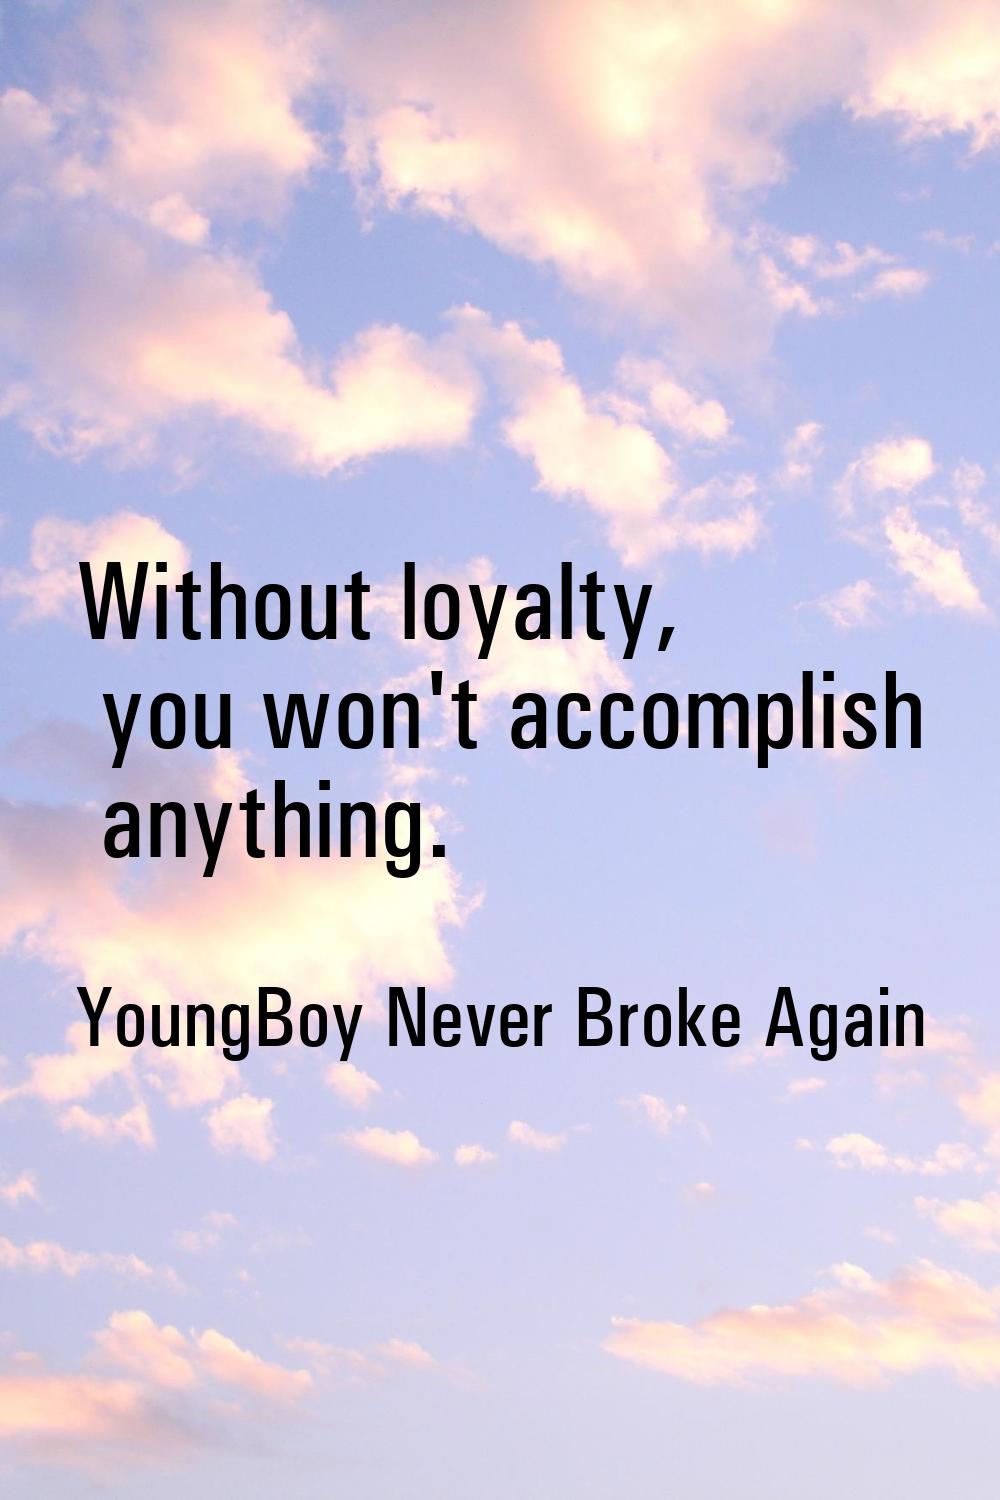 Without loyalty, you won't accomplish anything.